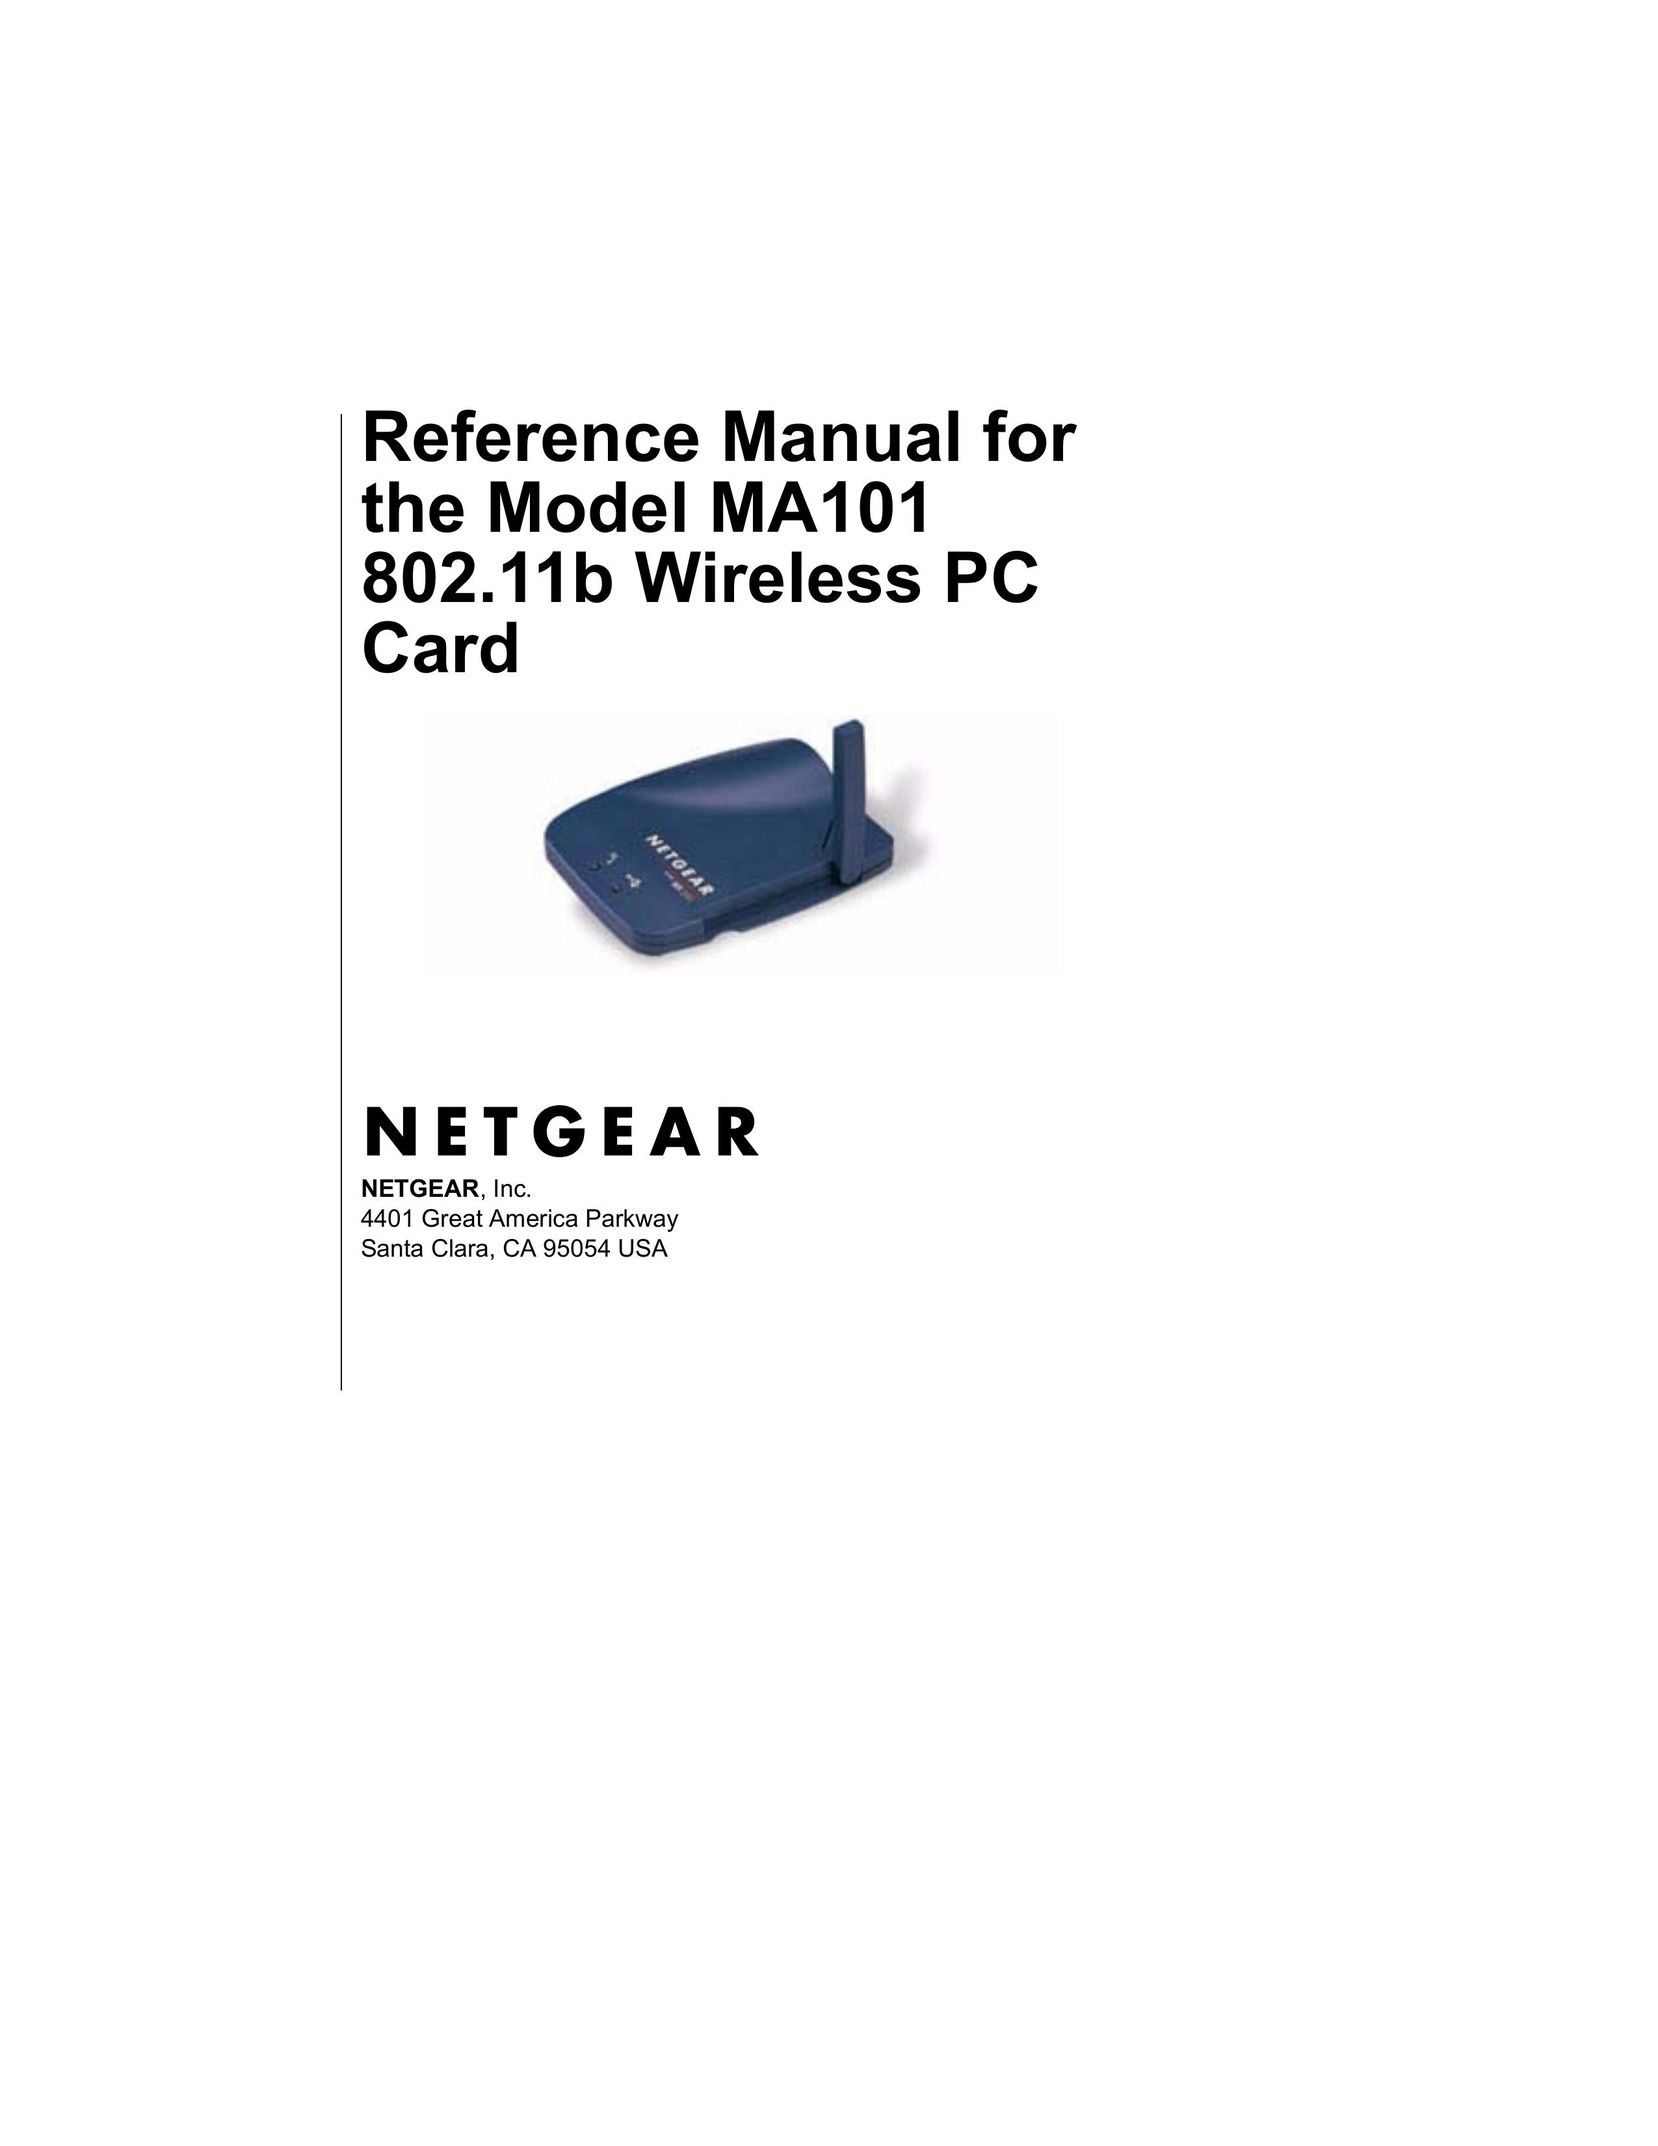 NETGEAR MA101 Network Card User Manual